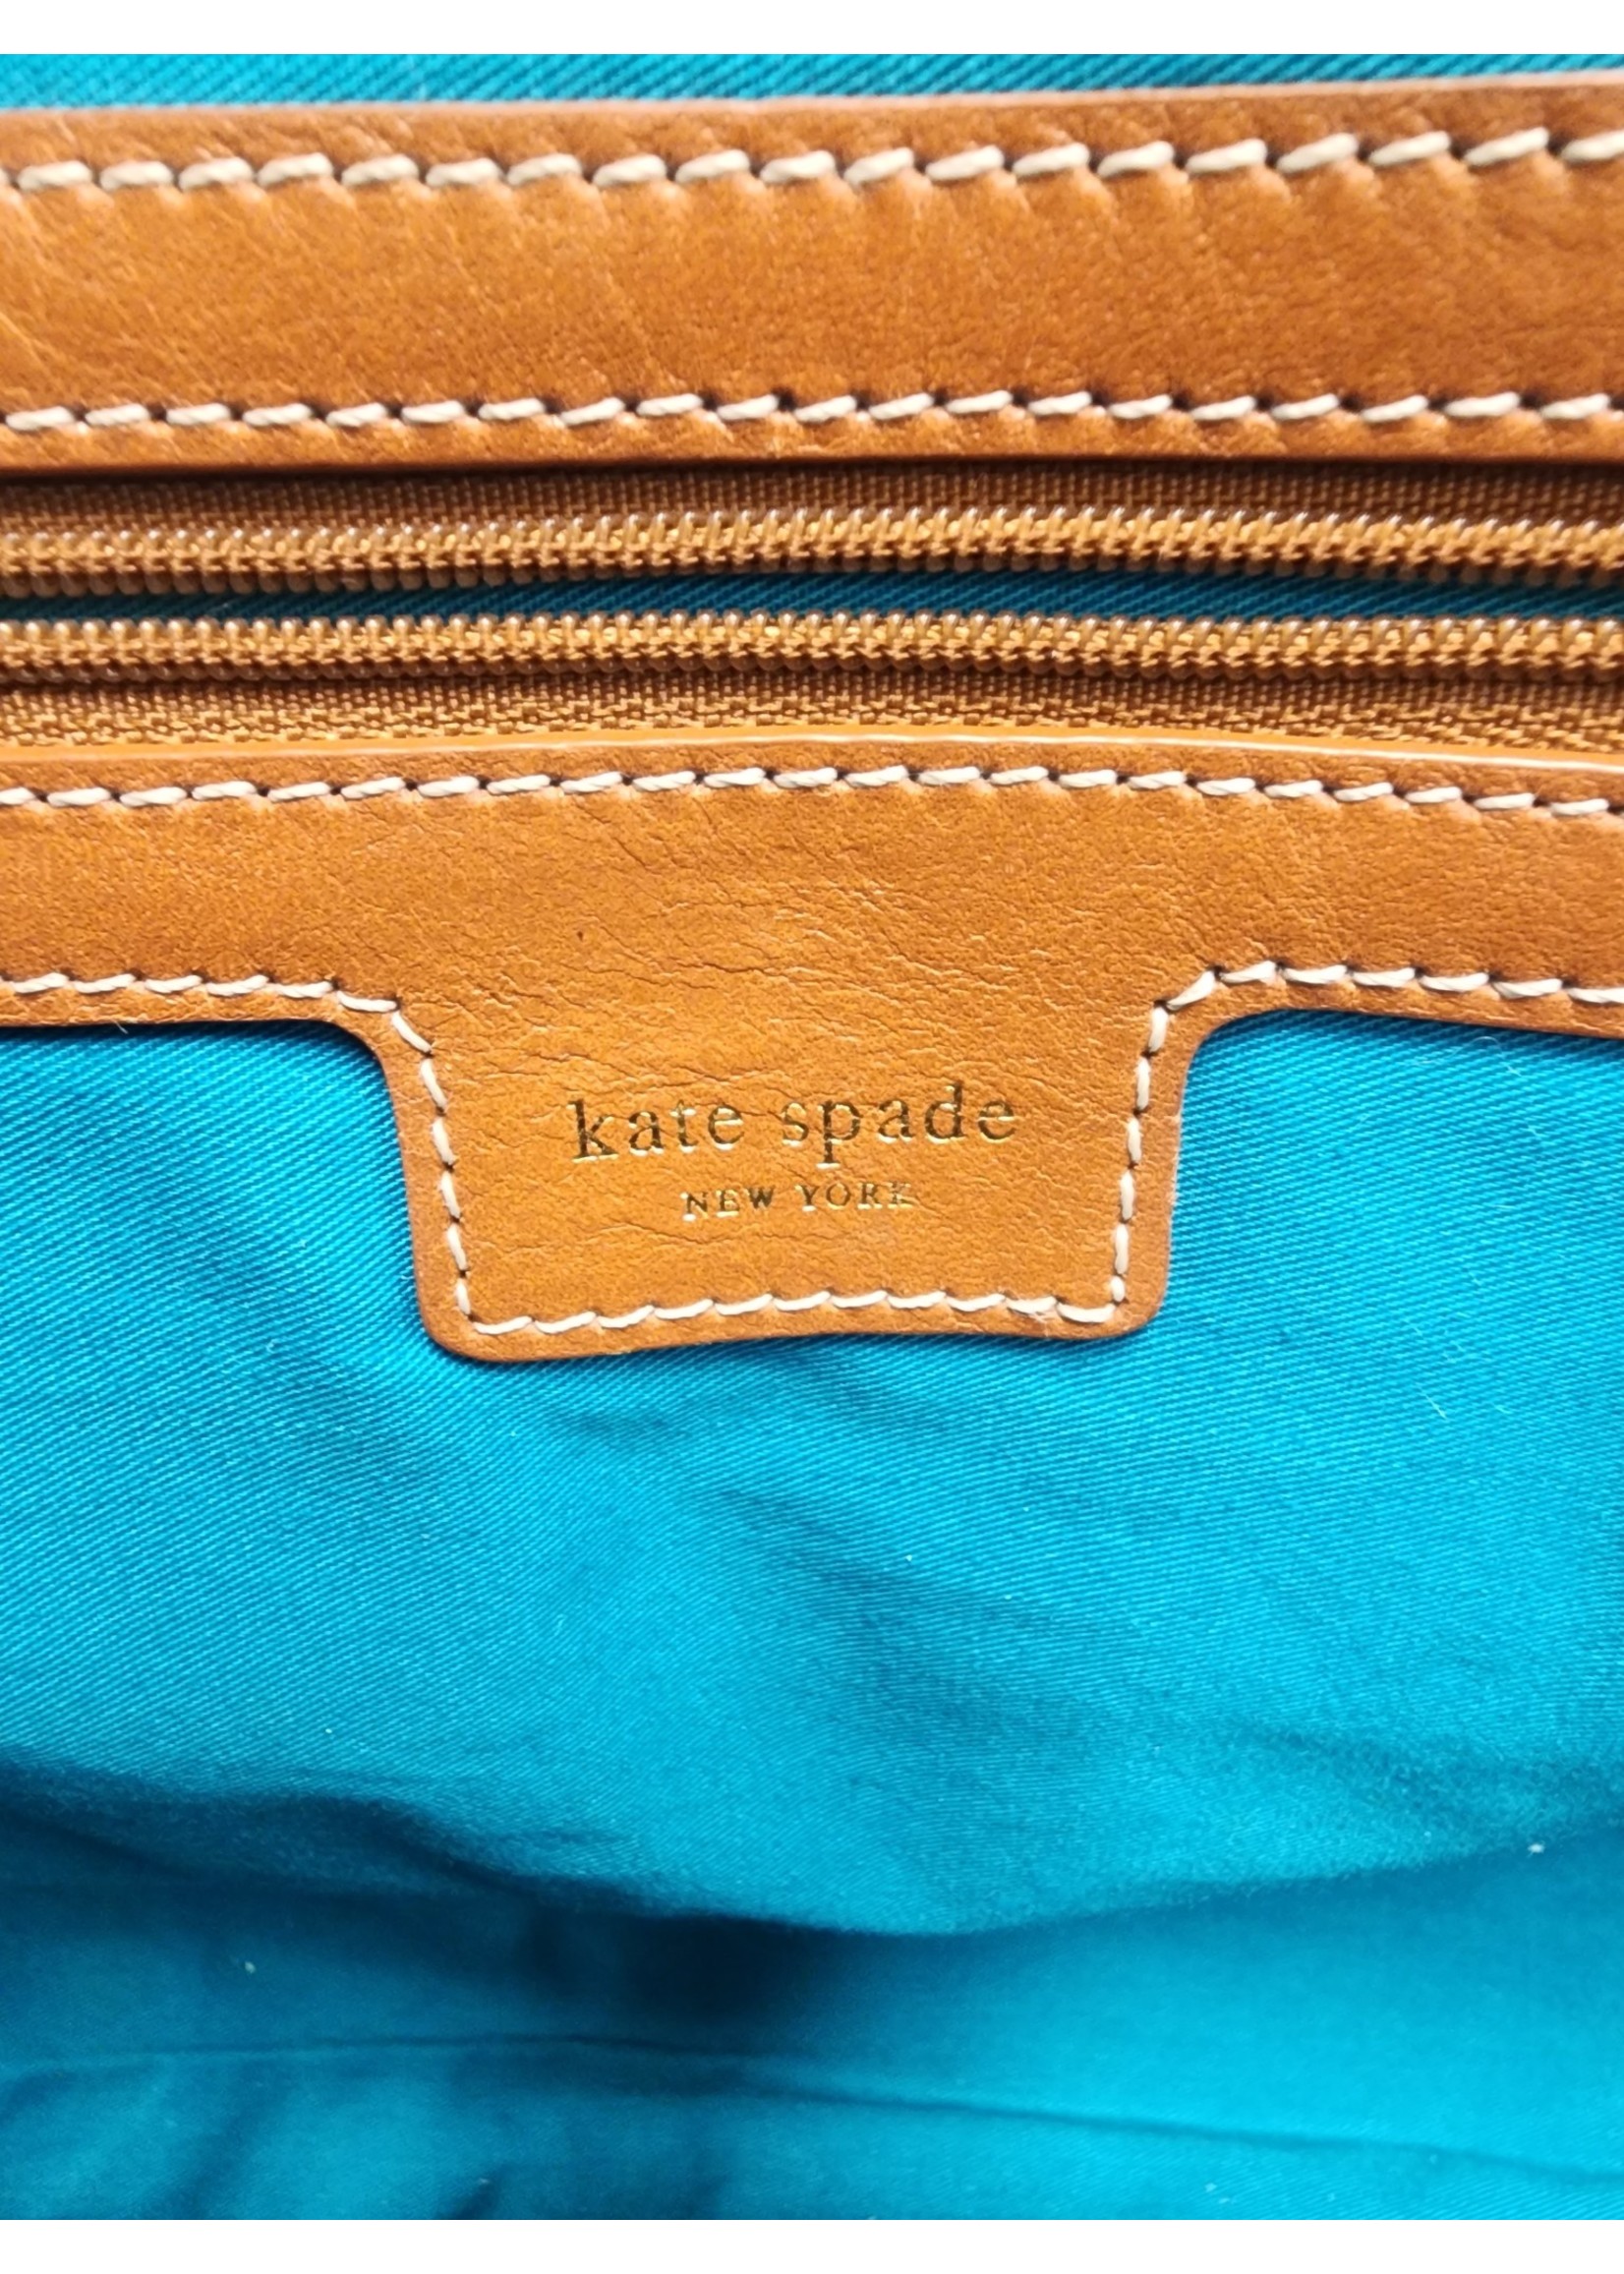 Kate Spade Camel Spice Things Up Sammi Backpack Blue Leather WKRU5142 - Kate  Spade bag - 098687178235 | Fash Brands